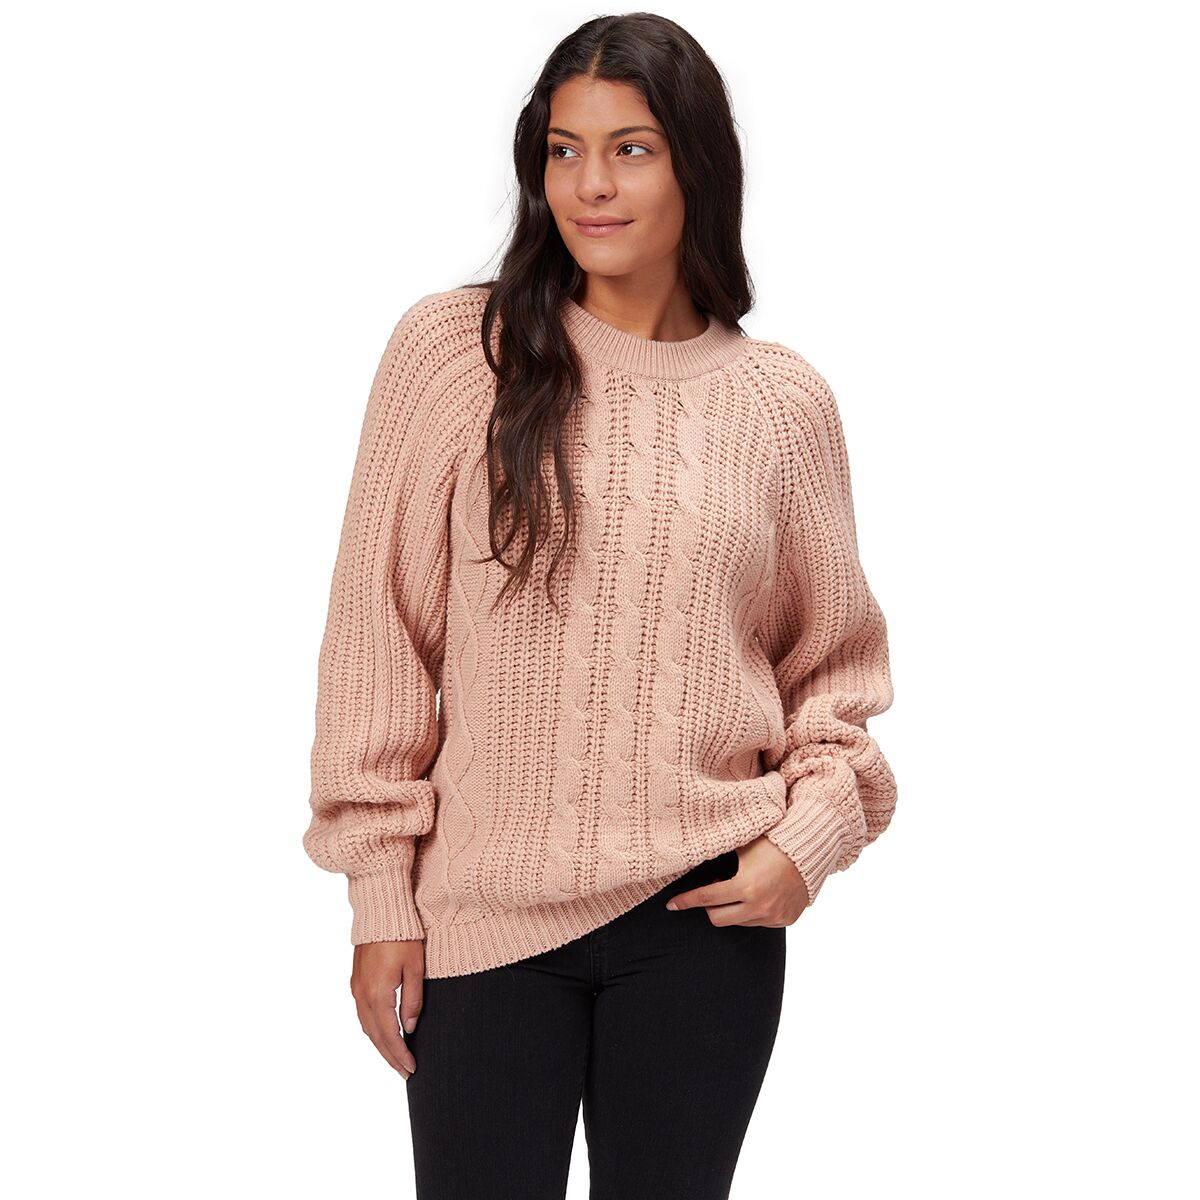 Basin and Range Fisherman's Sweater - Women's